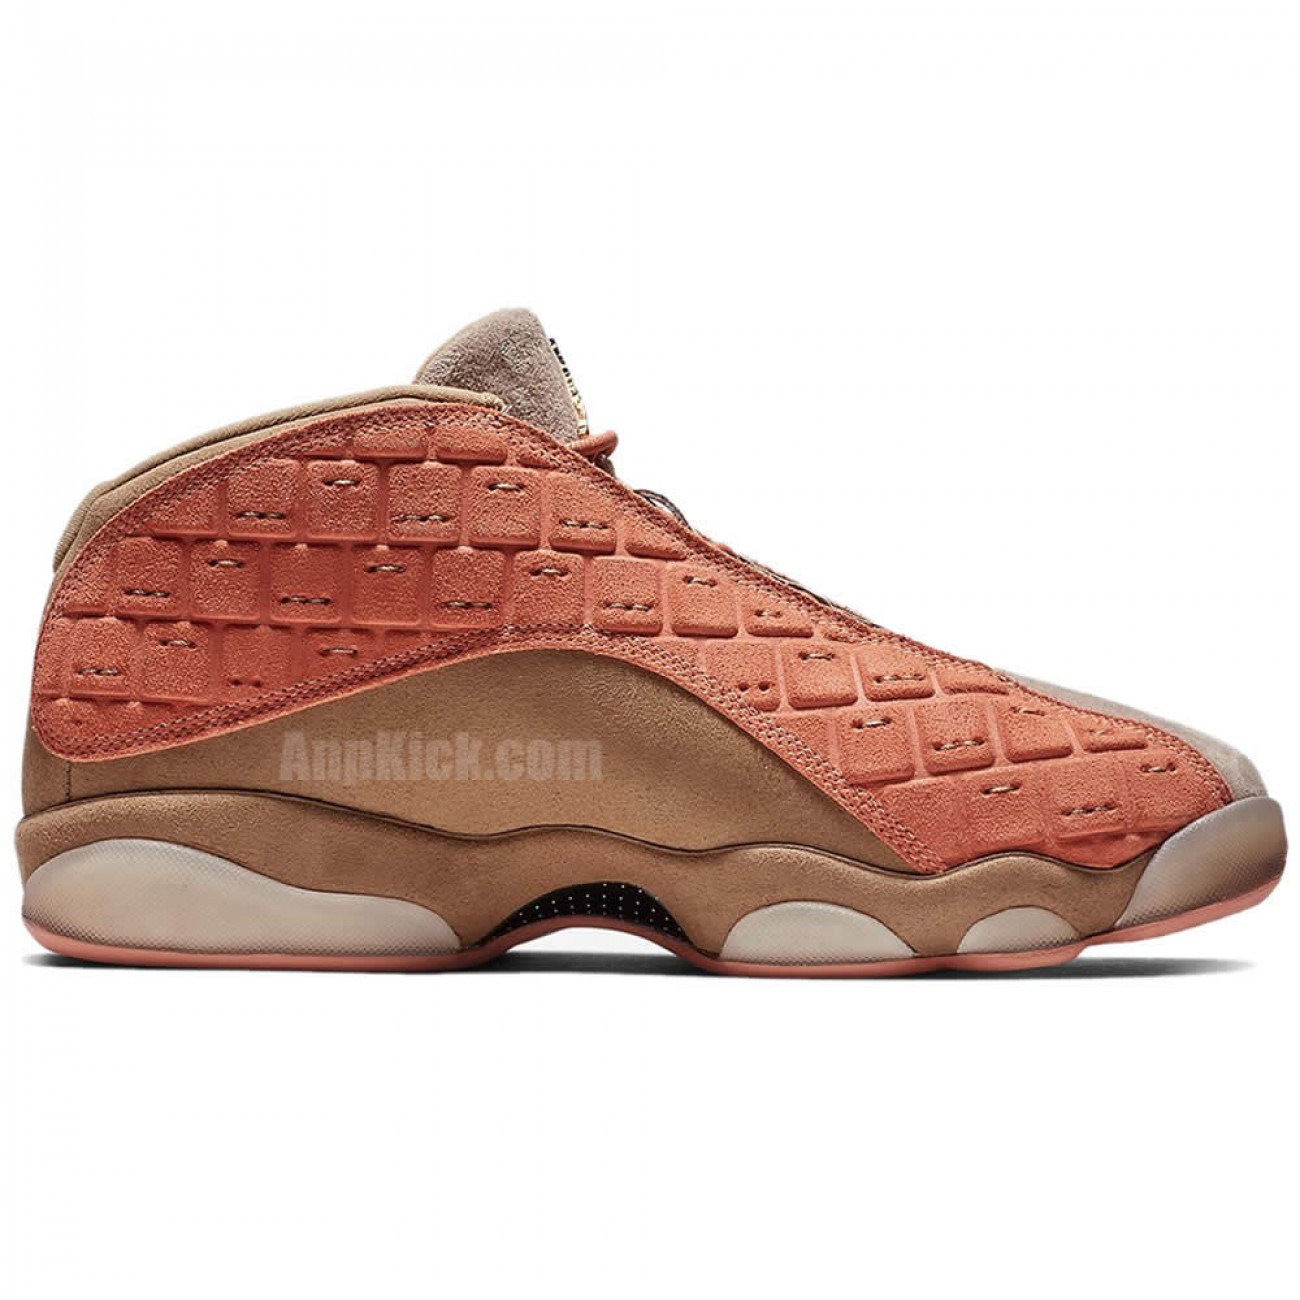 Clot x Air Jordan 13 Low "Terracotta Warriors" Shoes For Sale AT3102-200